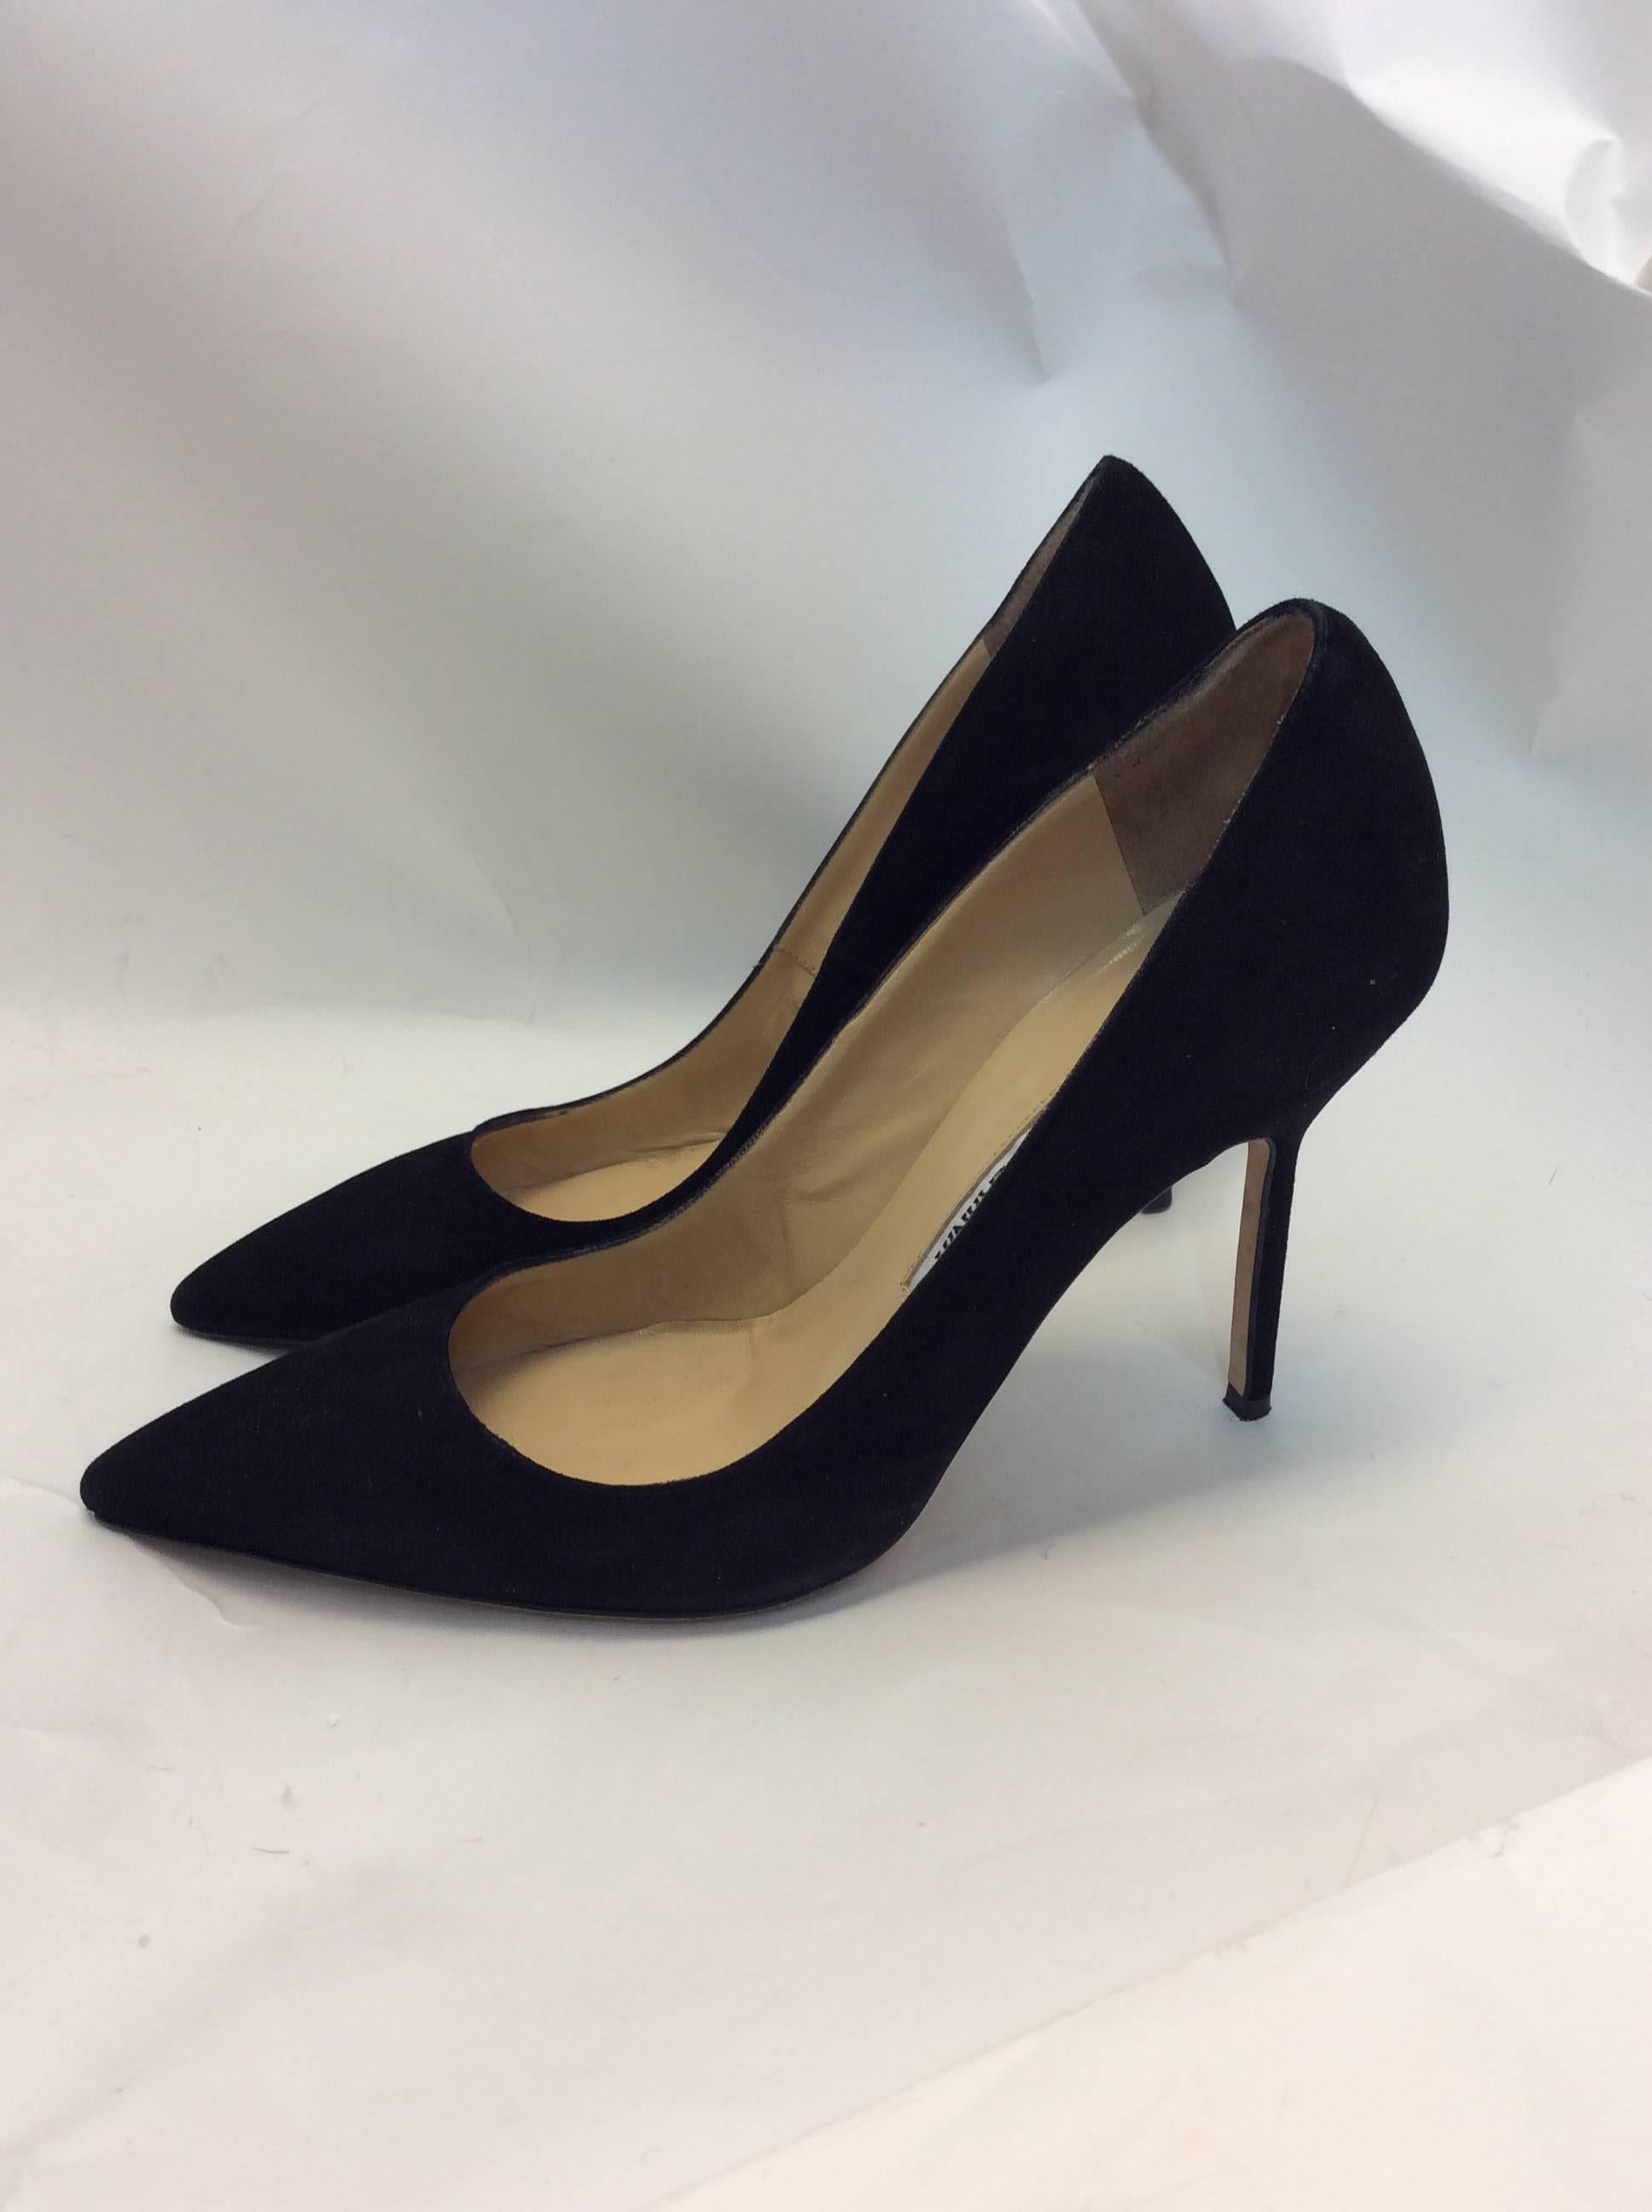 Manolo Blahnik Black Suede Pumps
4 inch heel
$399
size 37
Made in Italy